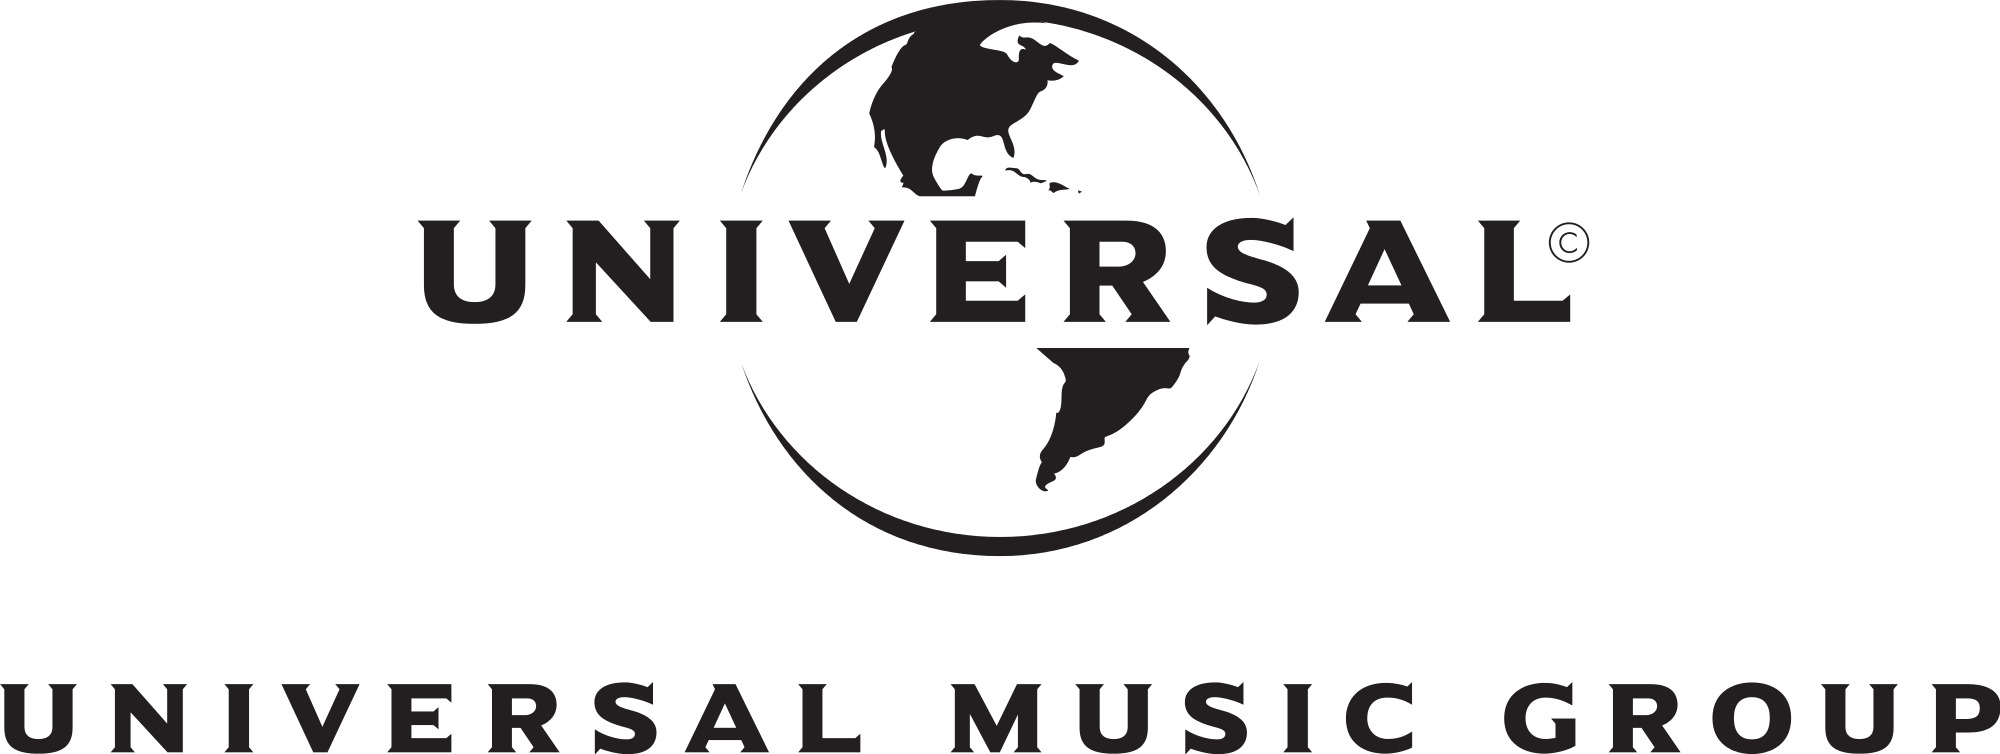 Universal Music Group Logo png